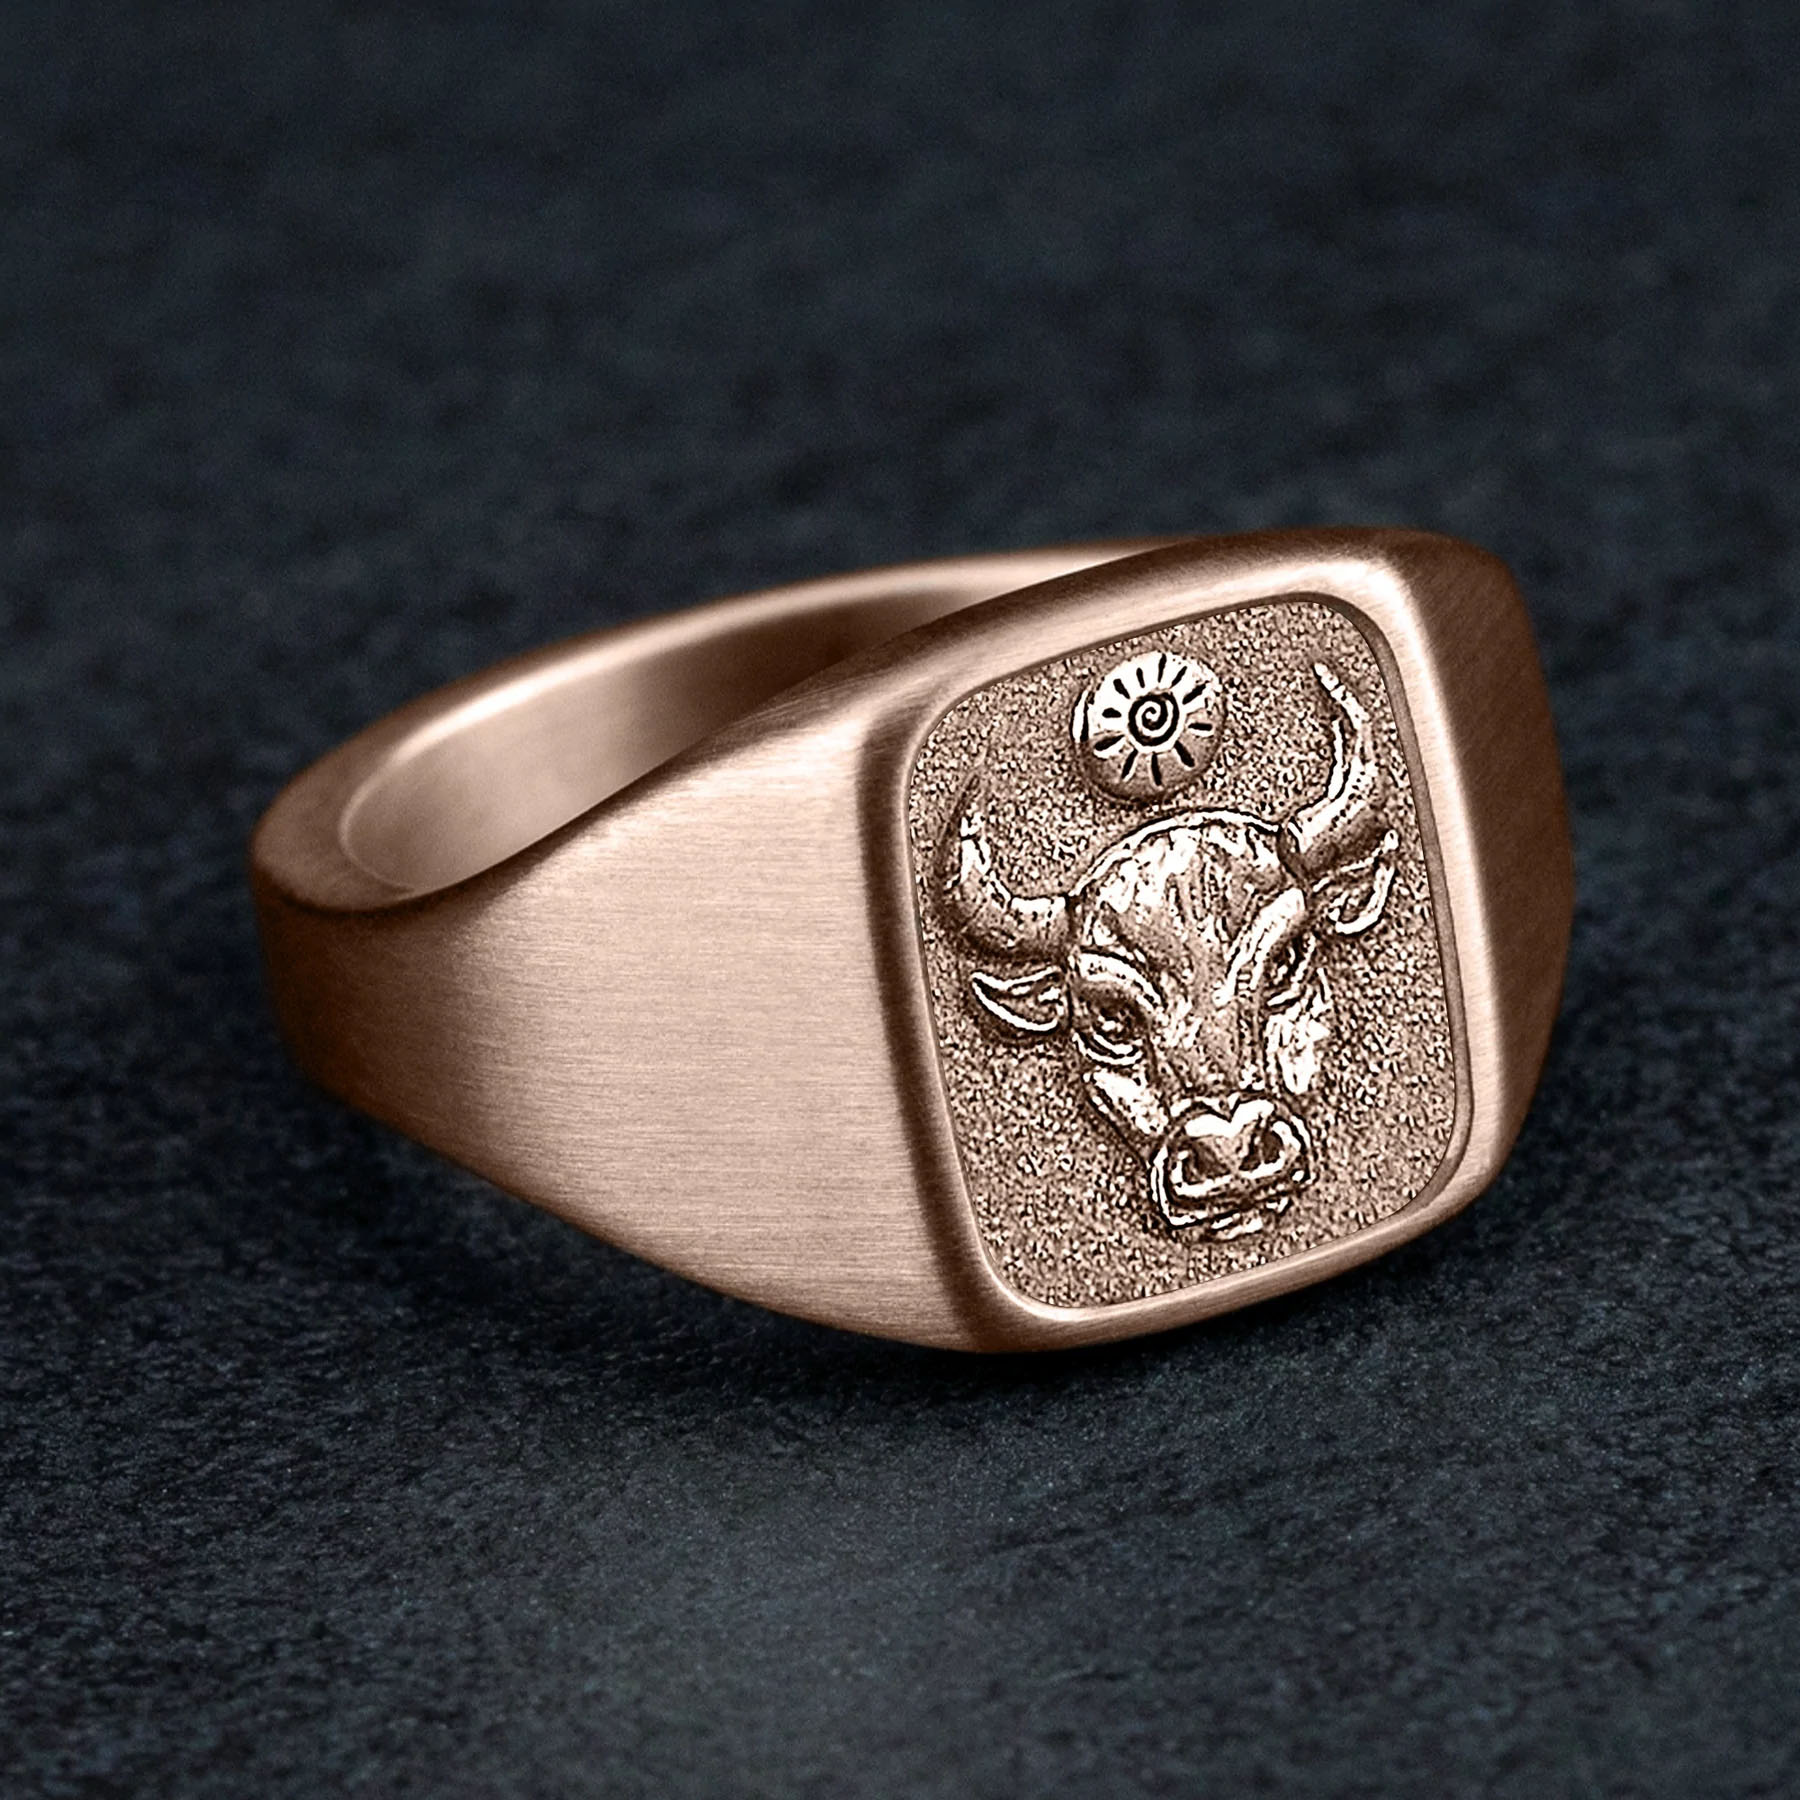 The Taurus - Customizable Signet Ring